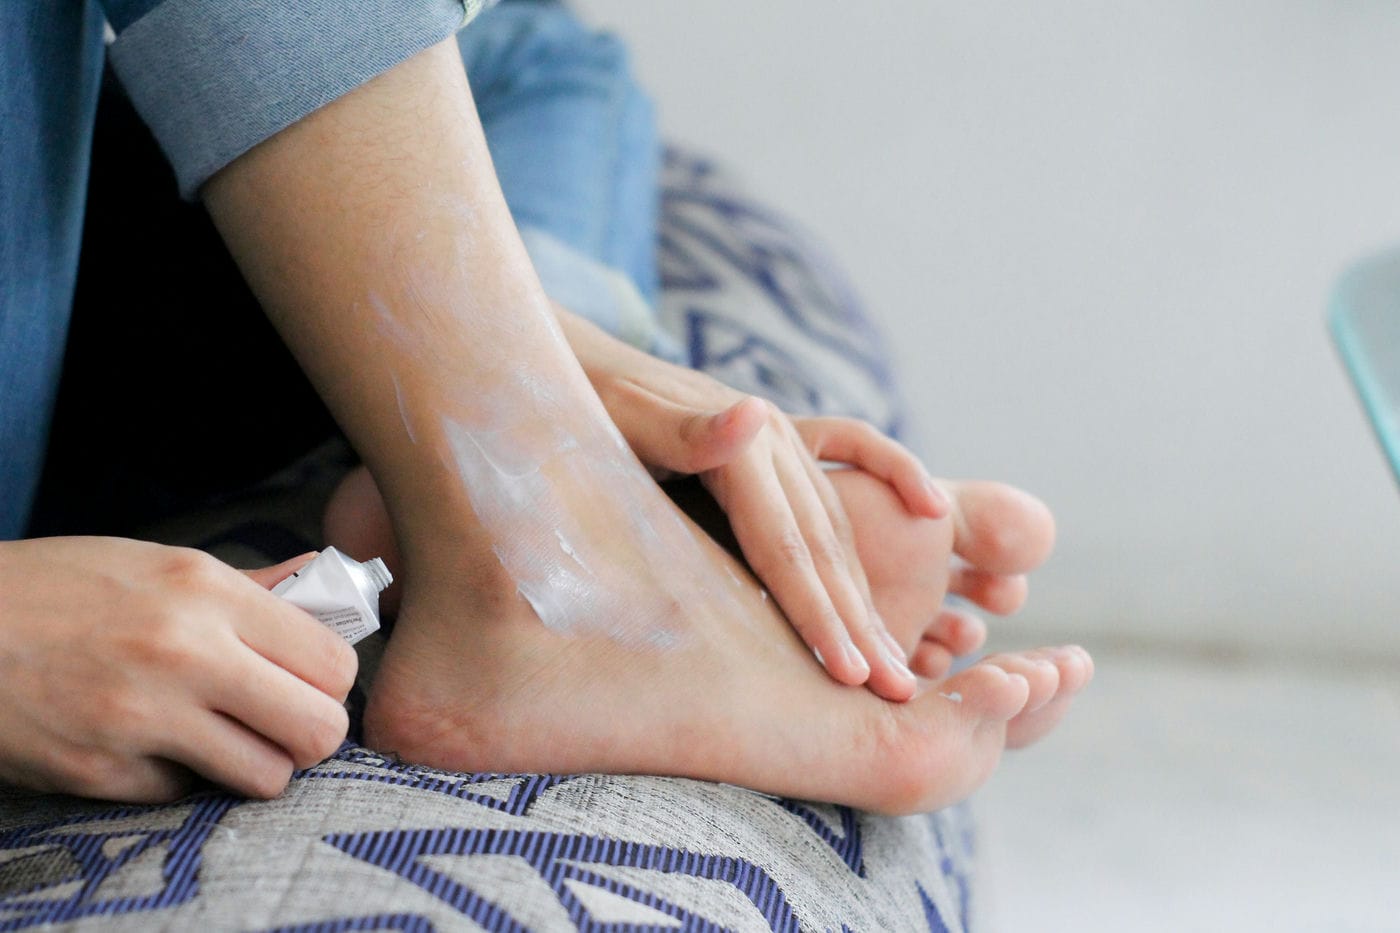 woman applying medicinal cream on her foot